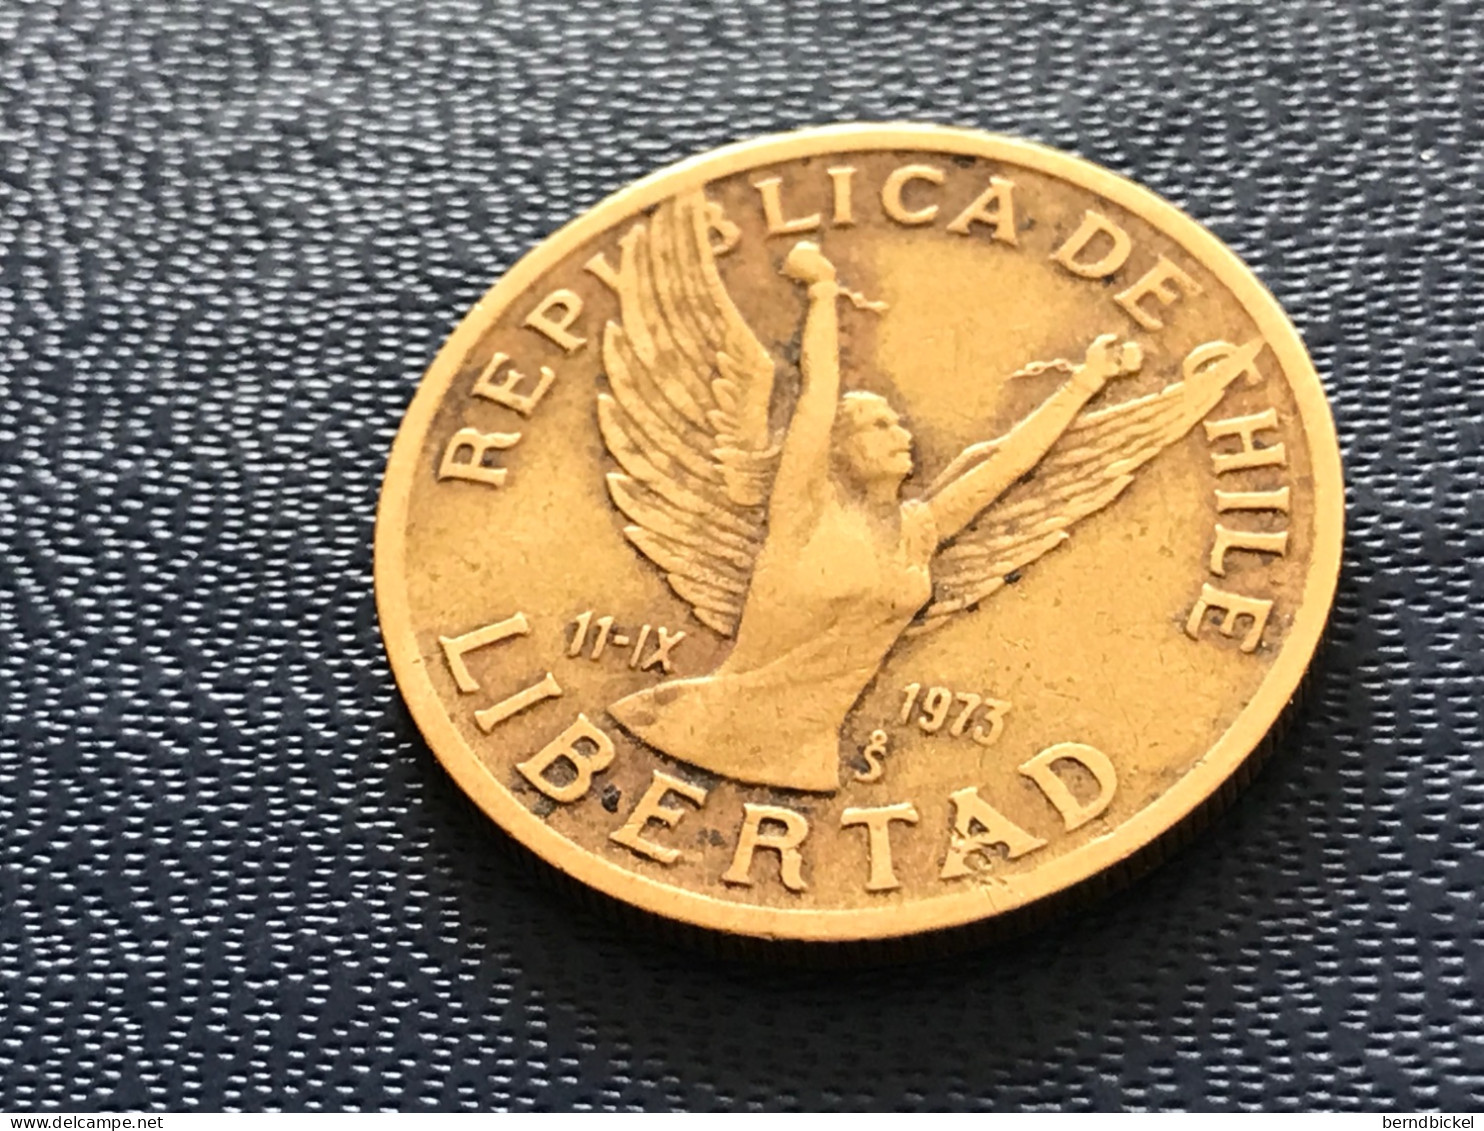 Münze Münzen Umlaufmünze Chile 10 Pesos 1988 - Chile